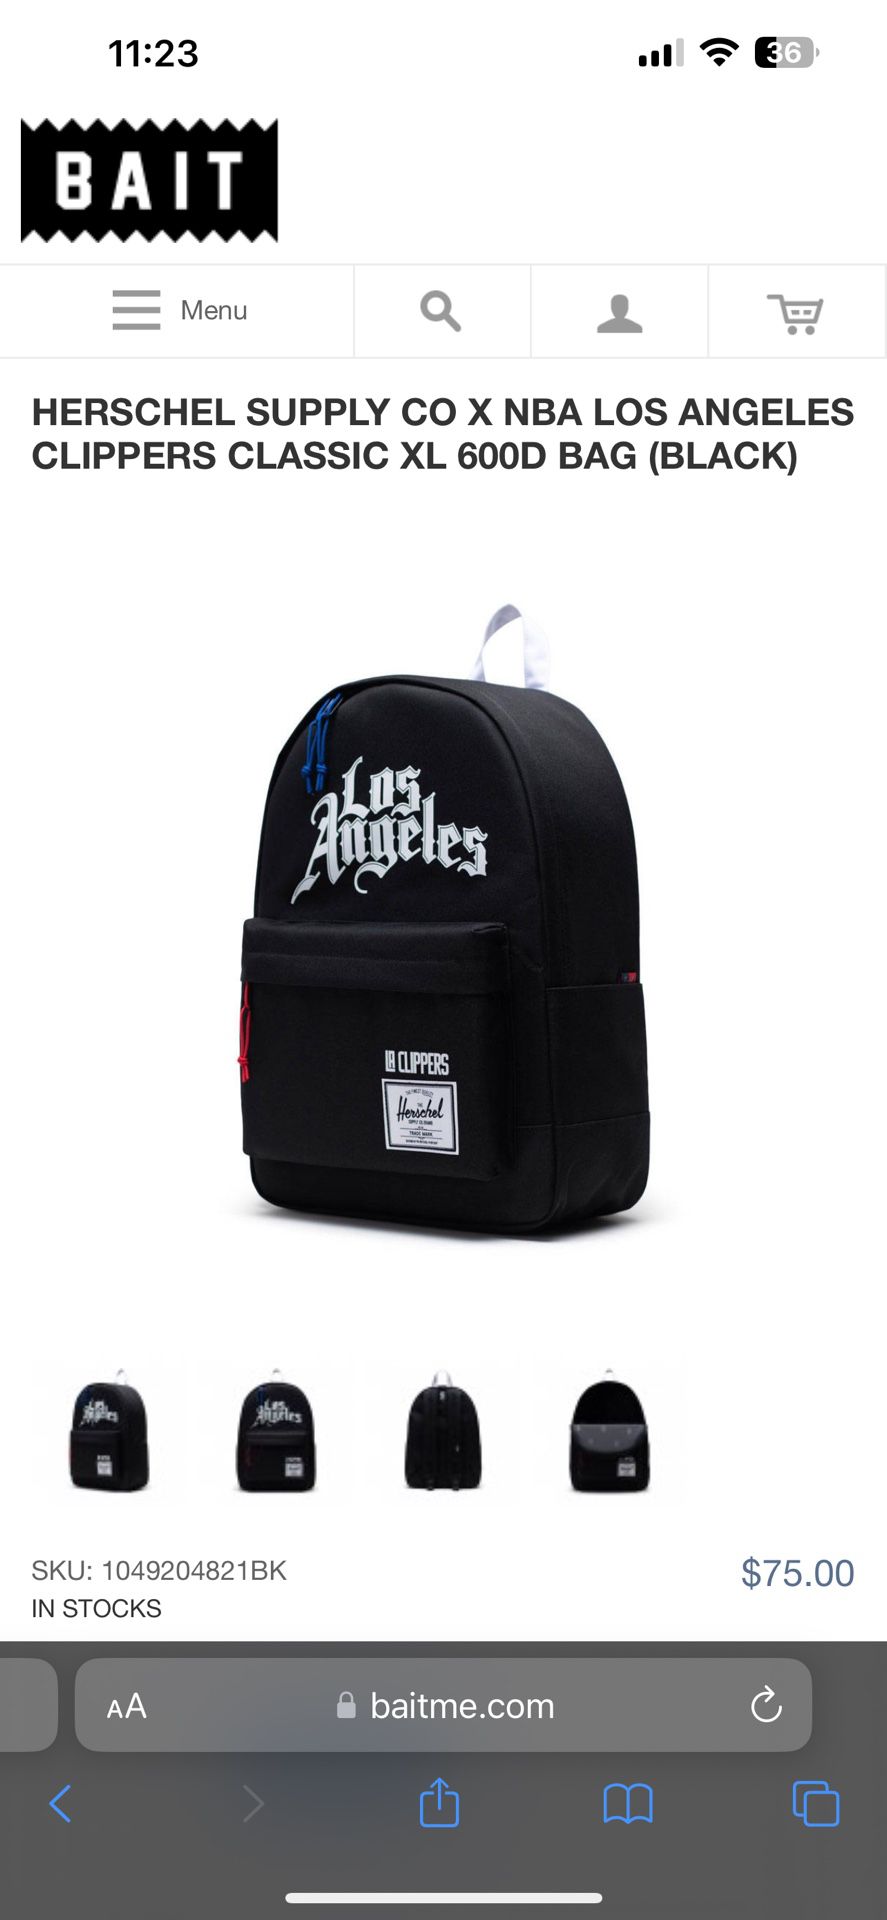 HERSCHEL SUPPLY CO X NBA LOS ANGELES CLIPPERS CLASSIC XL 600D BAG (BLACK)